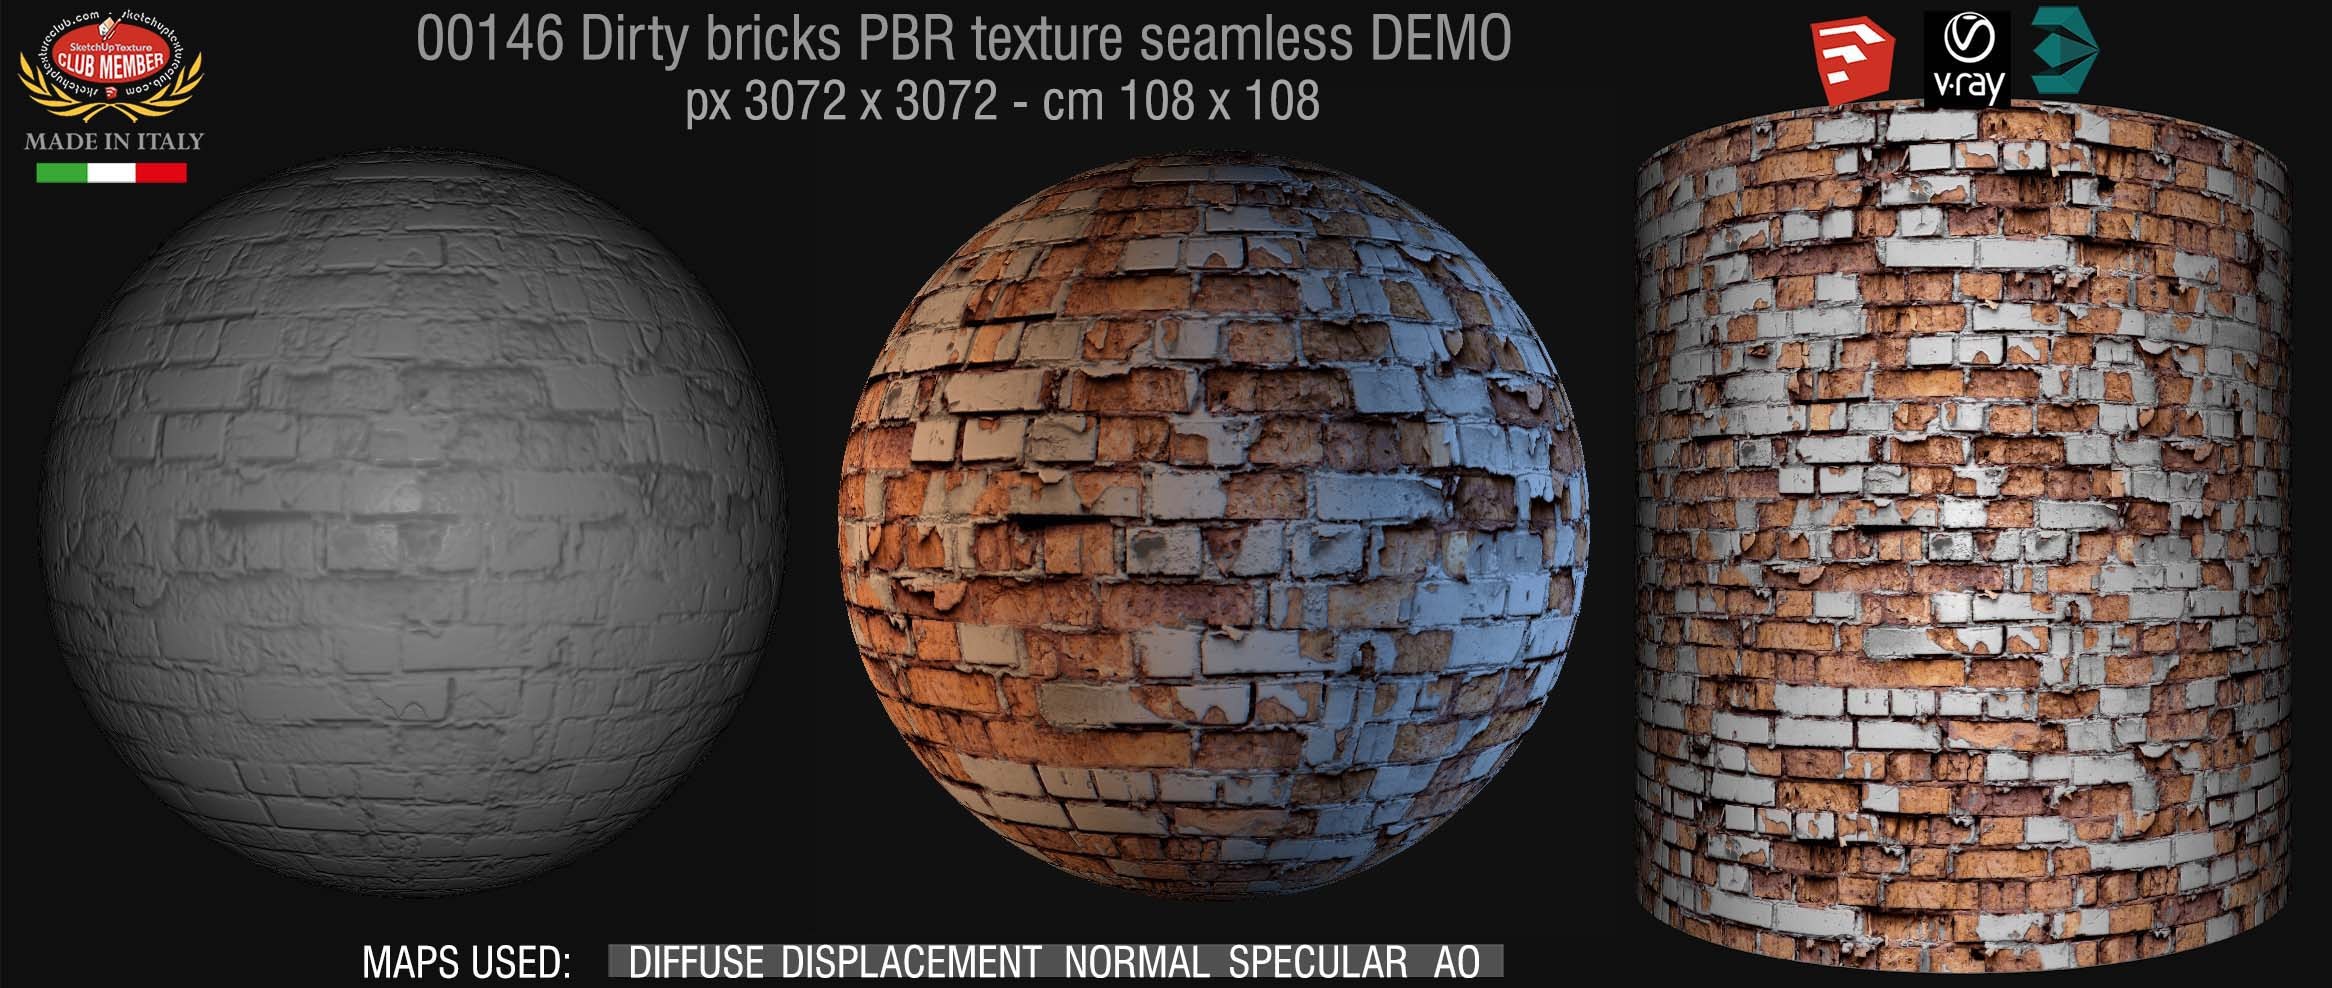 00146 Dirty bricks PBR texture seamless DEMO